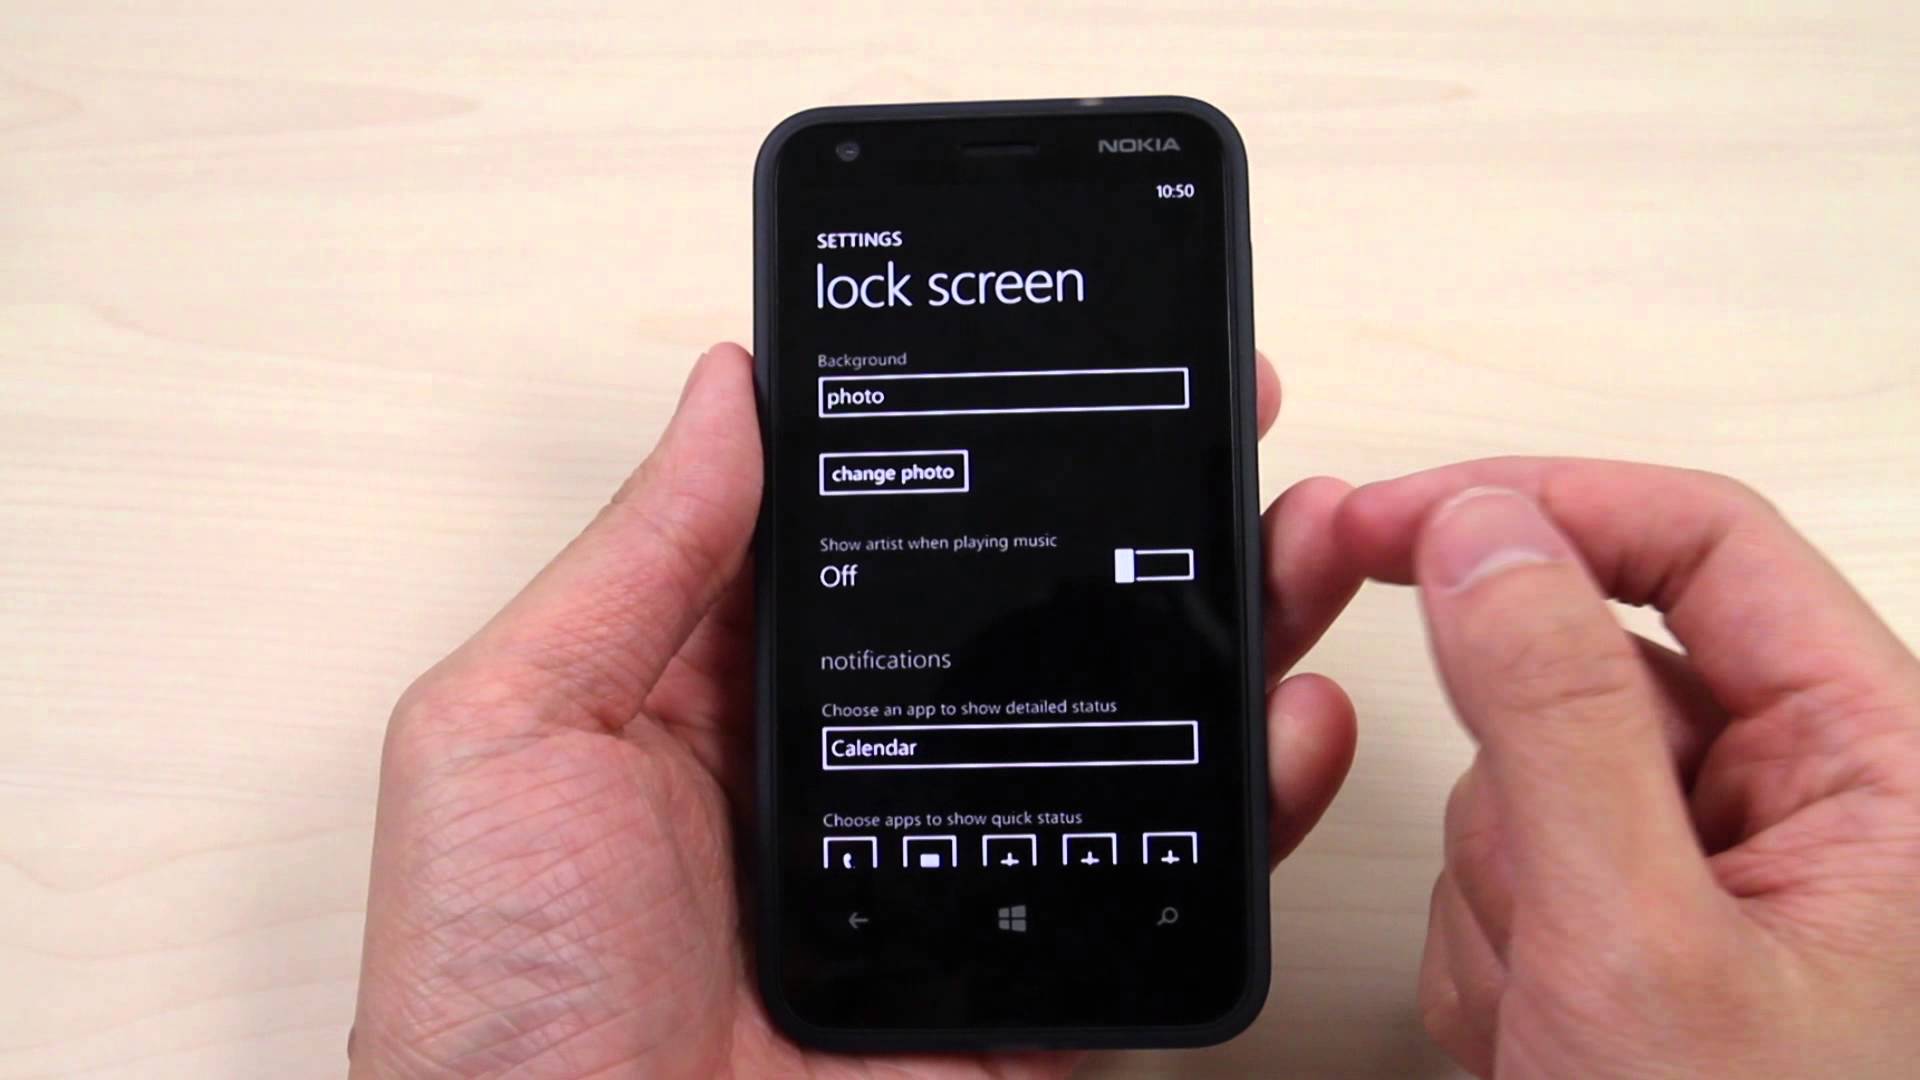 The Theme And Lock Screen Wallpaper On Nokia Lumia